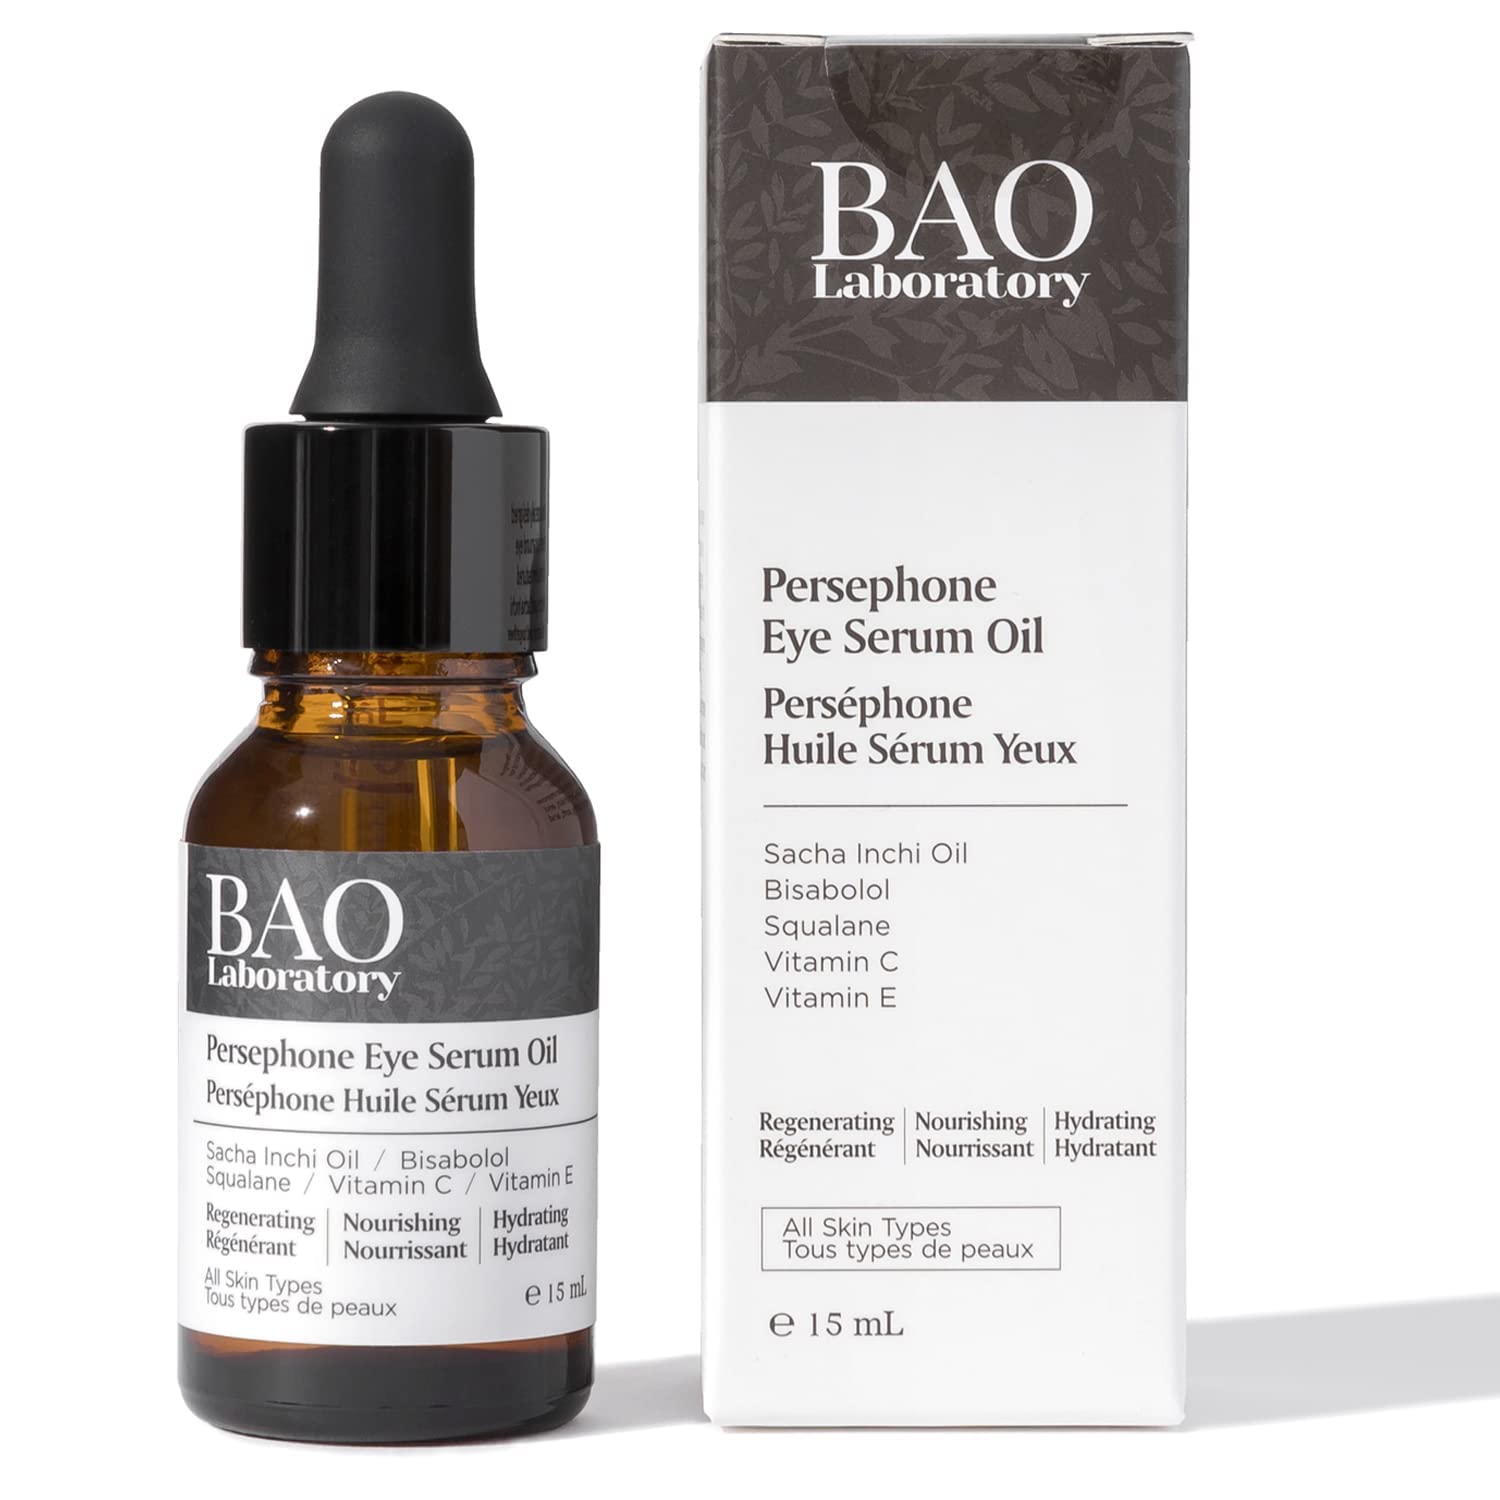 BAO Laboratory Persephone Eye Serum Oil (15 ML) | Sacha Inchi Oil, Bisabolol and Vitamin C & E | Eye Serum for Wrinkles, Finelines and Dark Circle